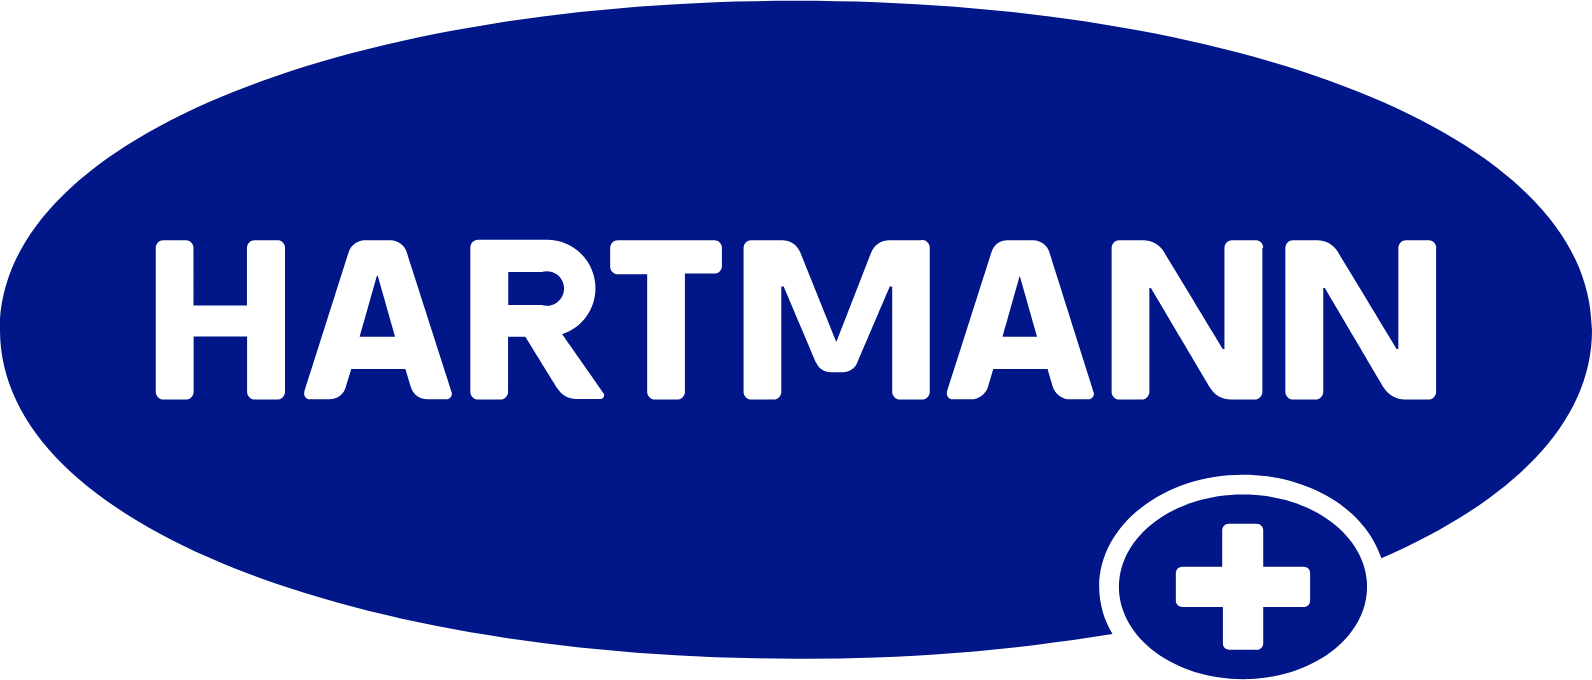 Paul Hartmann logo large (transparent PNG)